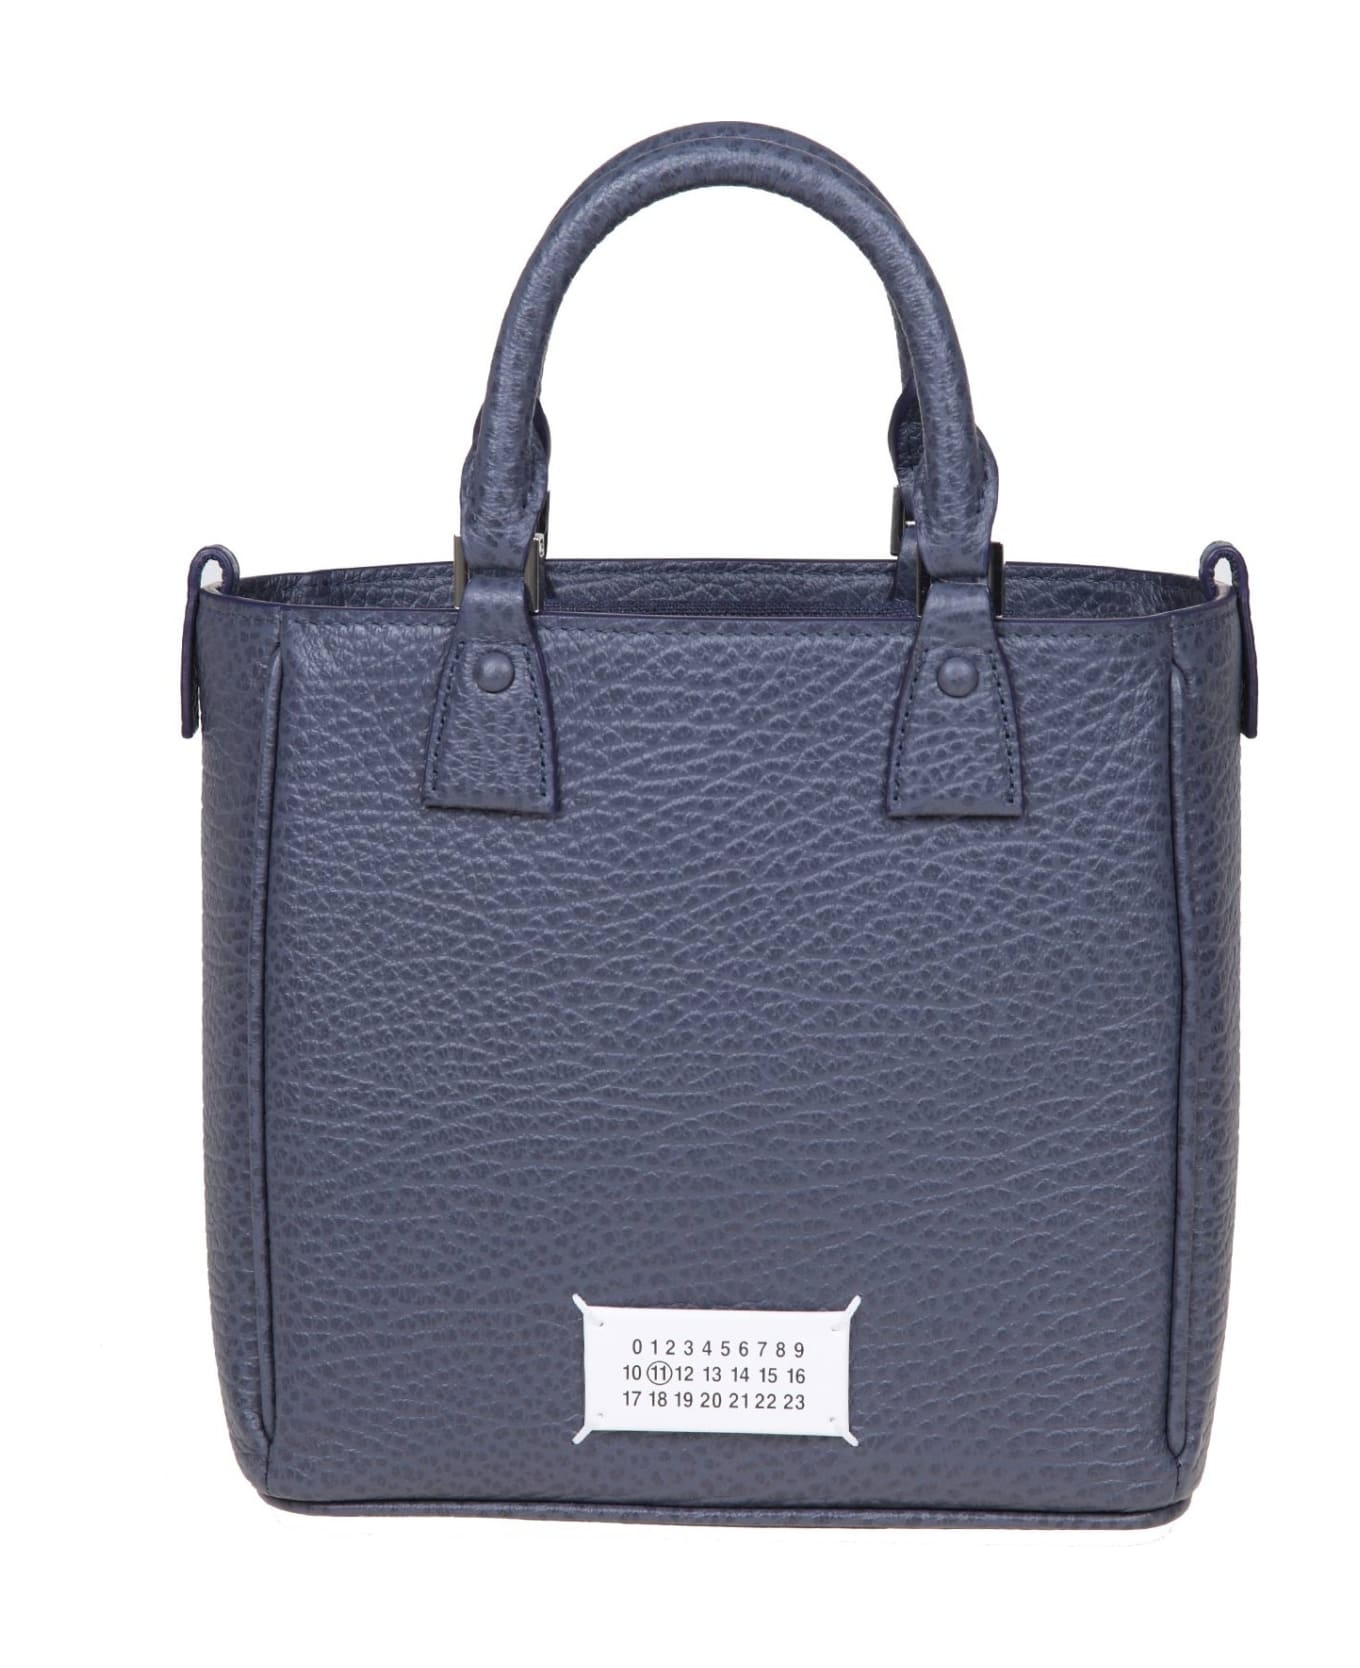 Maison Margiela 5c Vertical Tote Bag In Blue Leather - BLUE